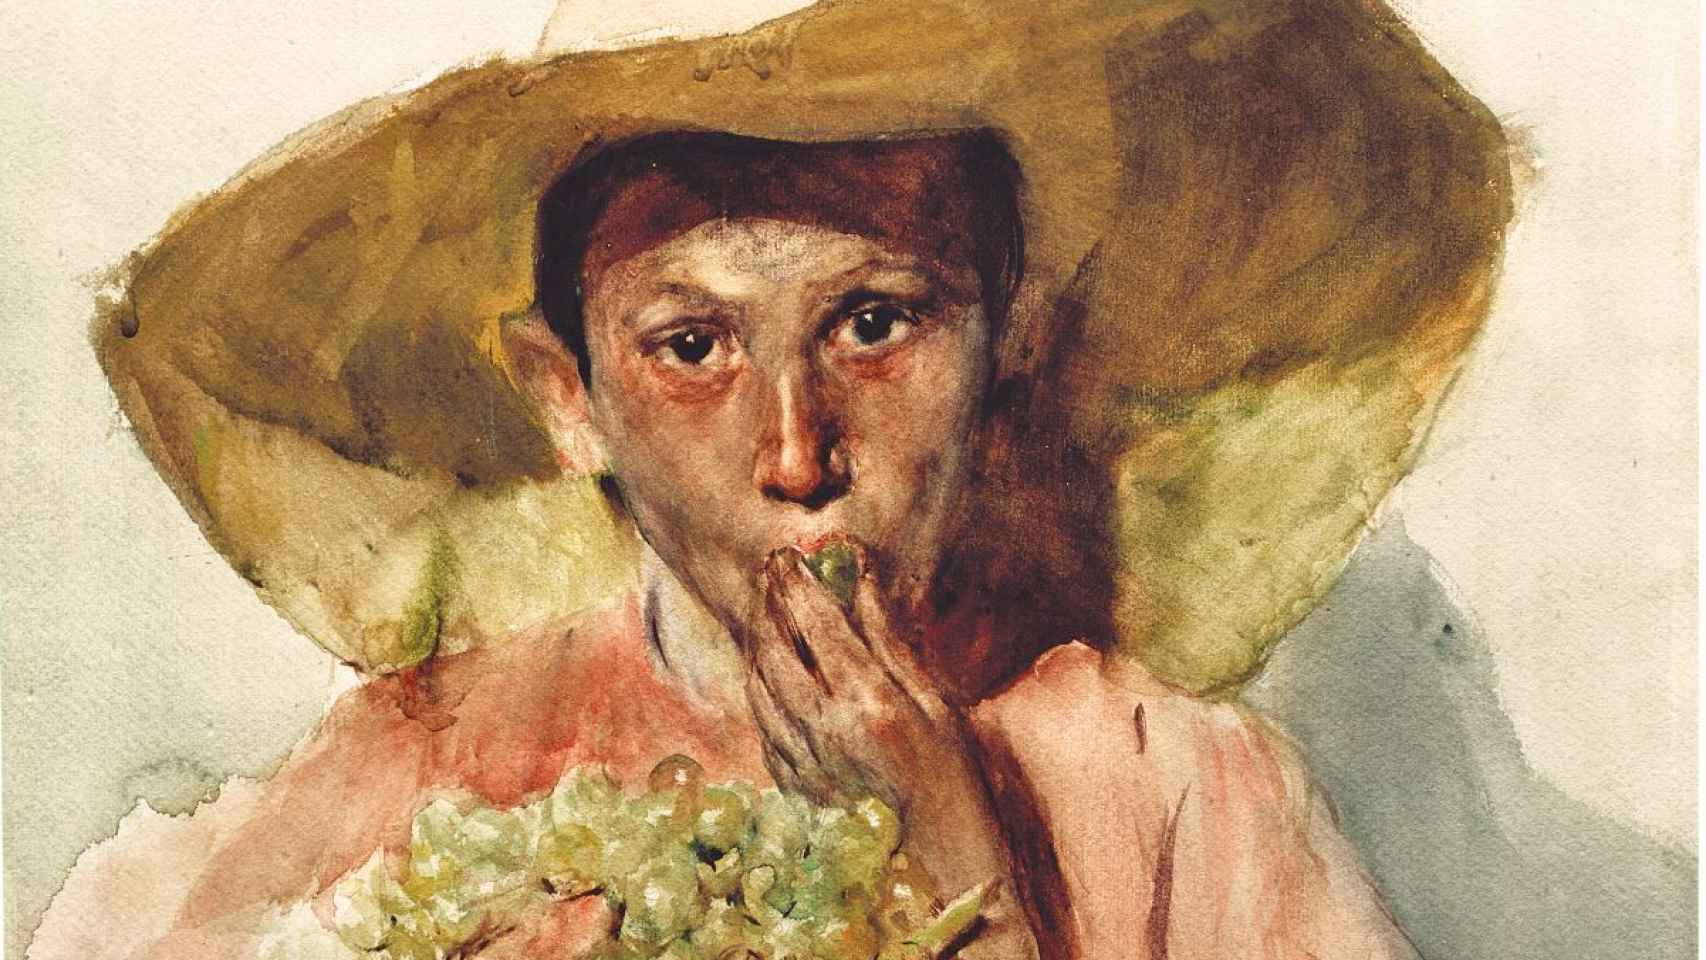 'Comiendo uvas'. Acuarela pintada por Sorolla en 1898.